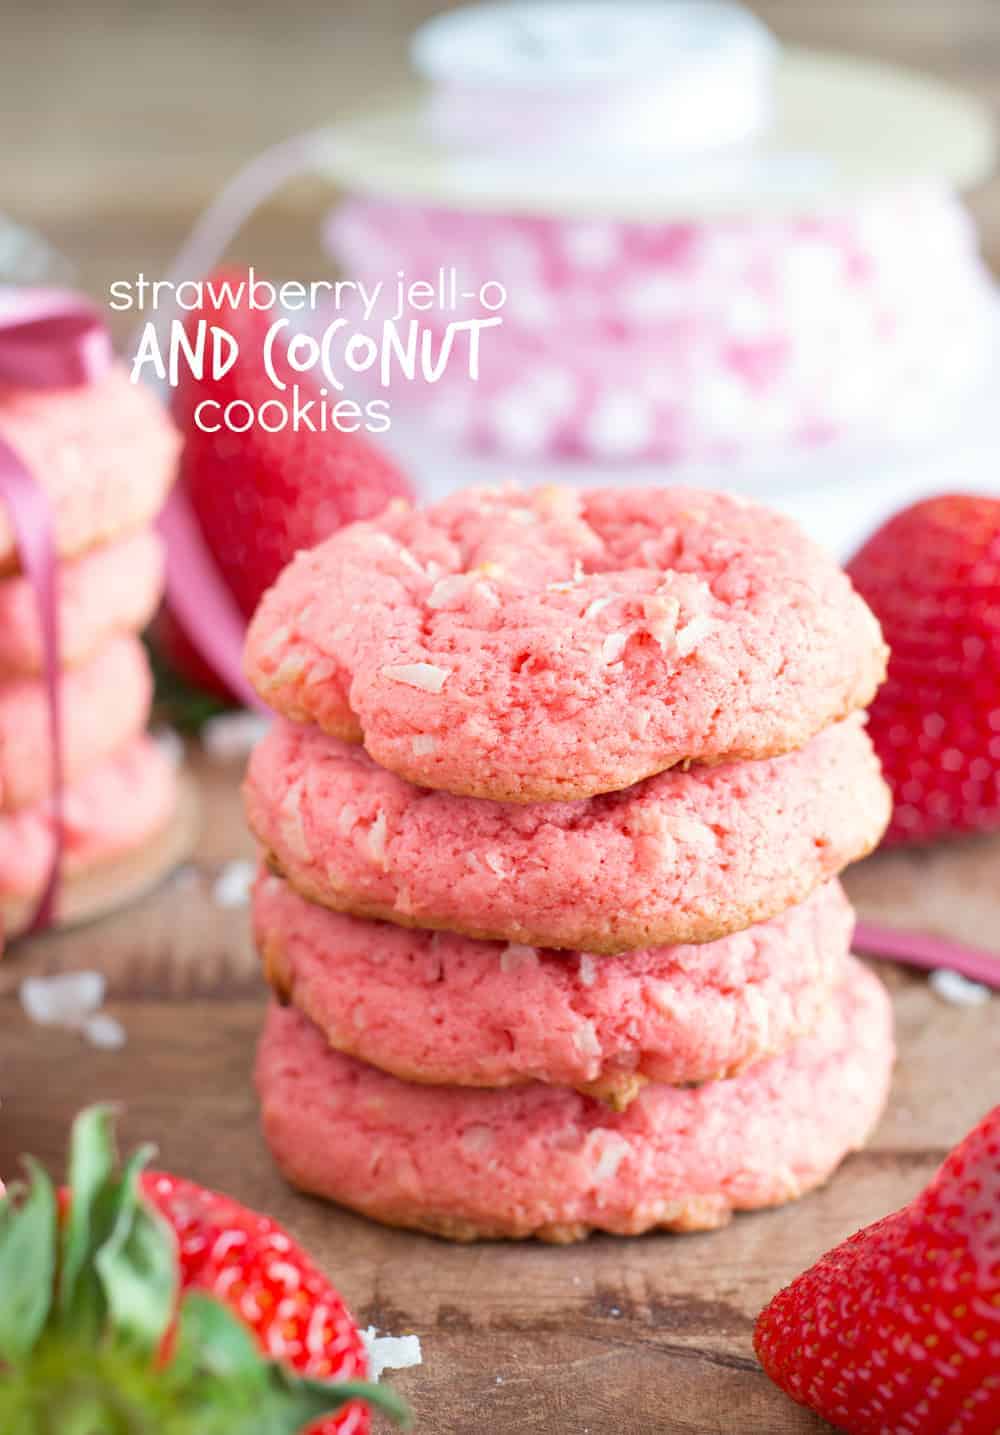 Strawberry Jell-o & Coconut Cookies | The Recipe Critic